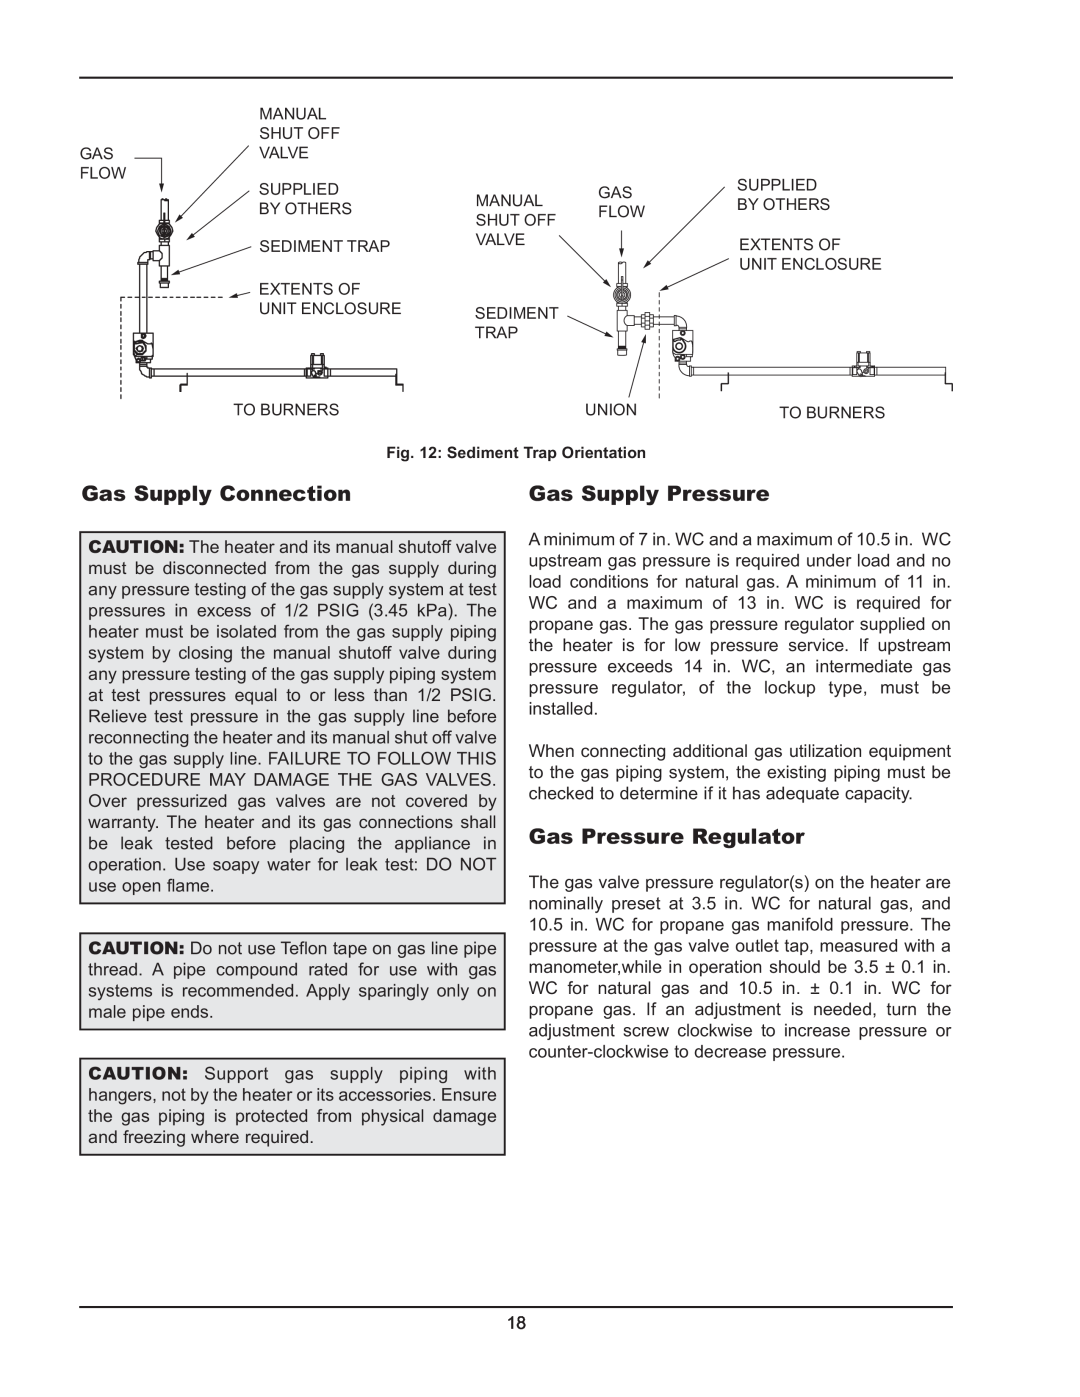 Raypak 122-322 manual Gas Supply Connection, Gas Supply Pressure, Gas Pressure Regulator 